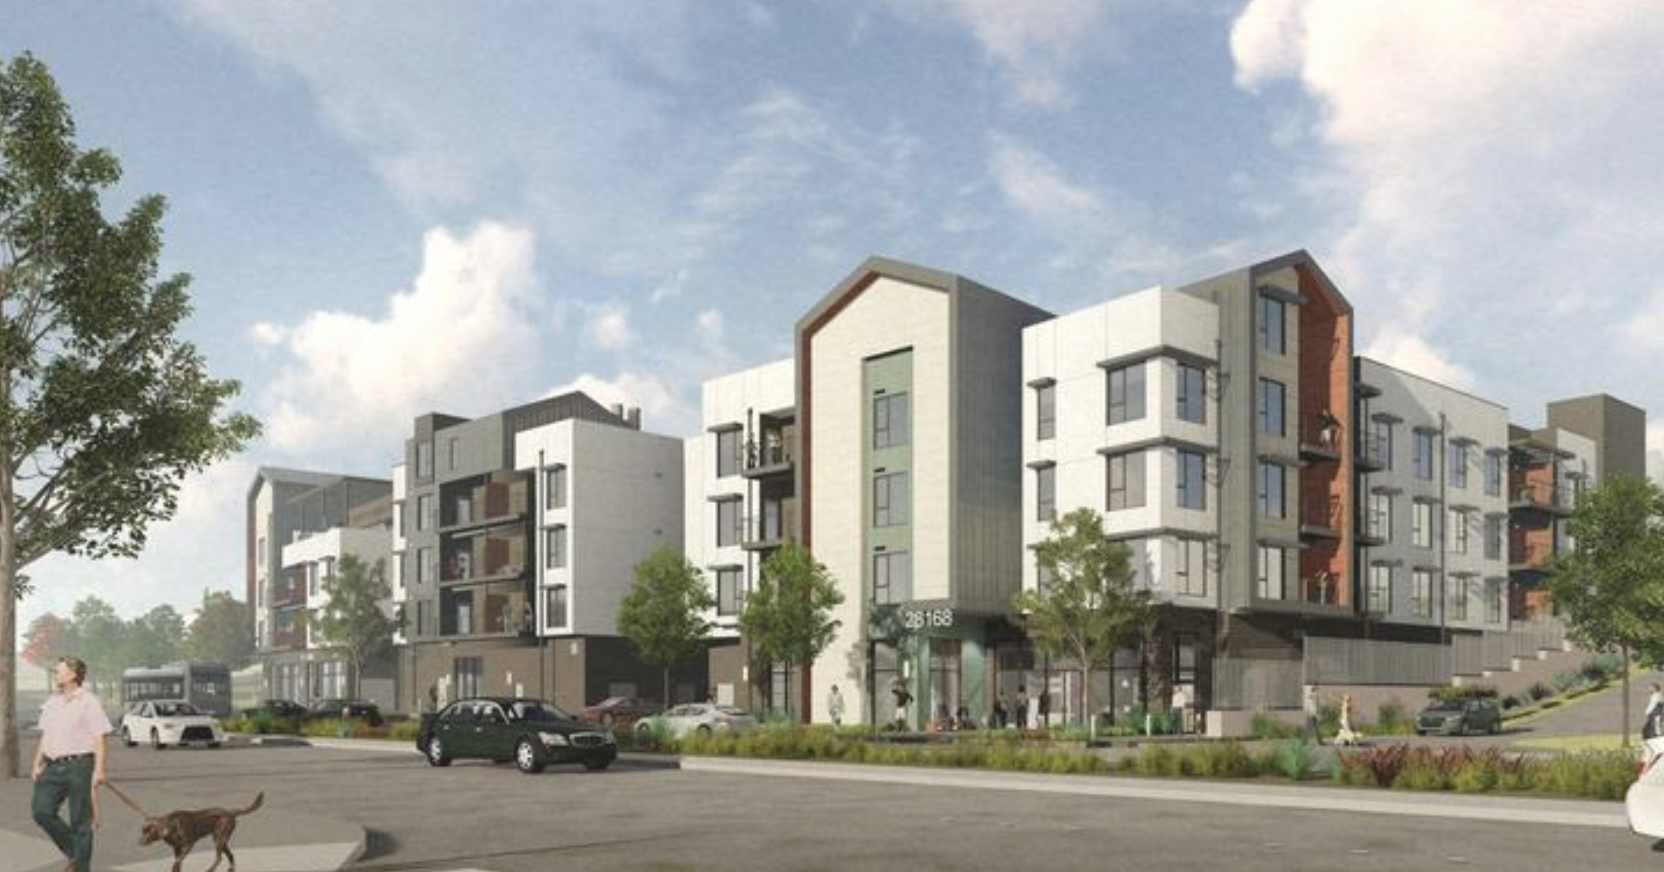 Construction tech company with $1.2 billion in backing to build Hayward apartments near BART